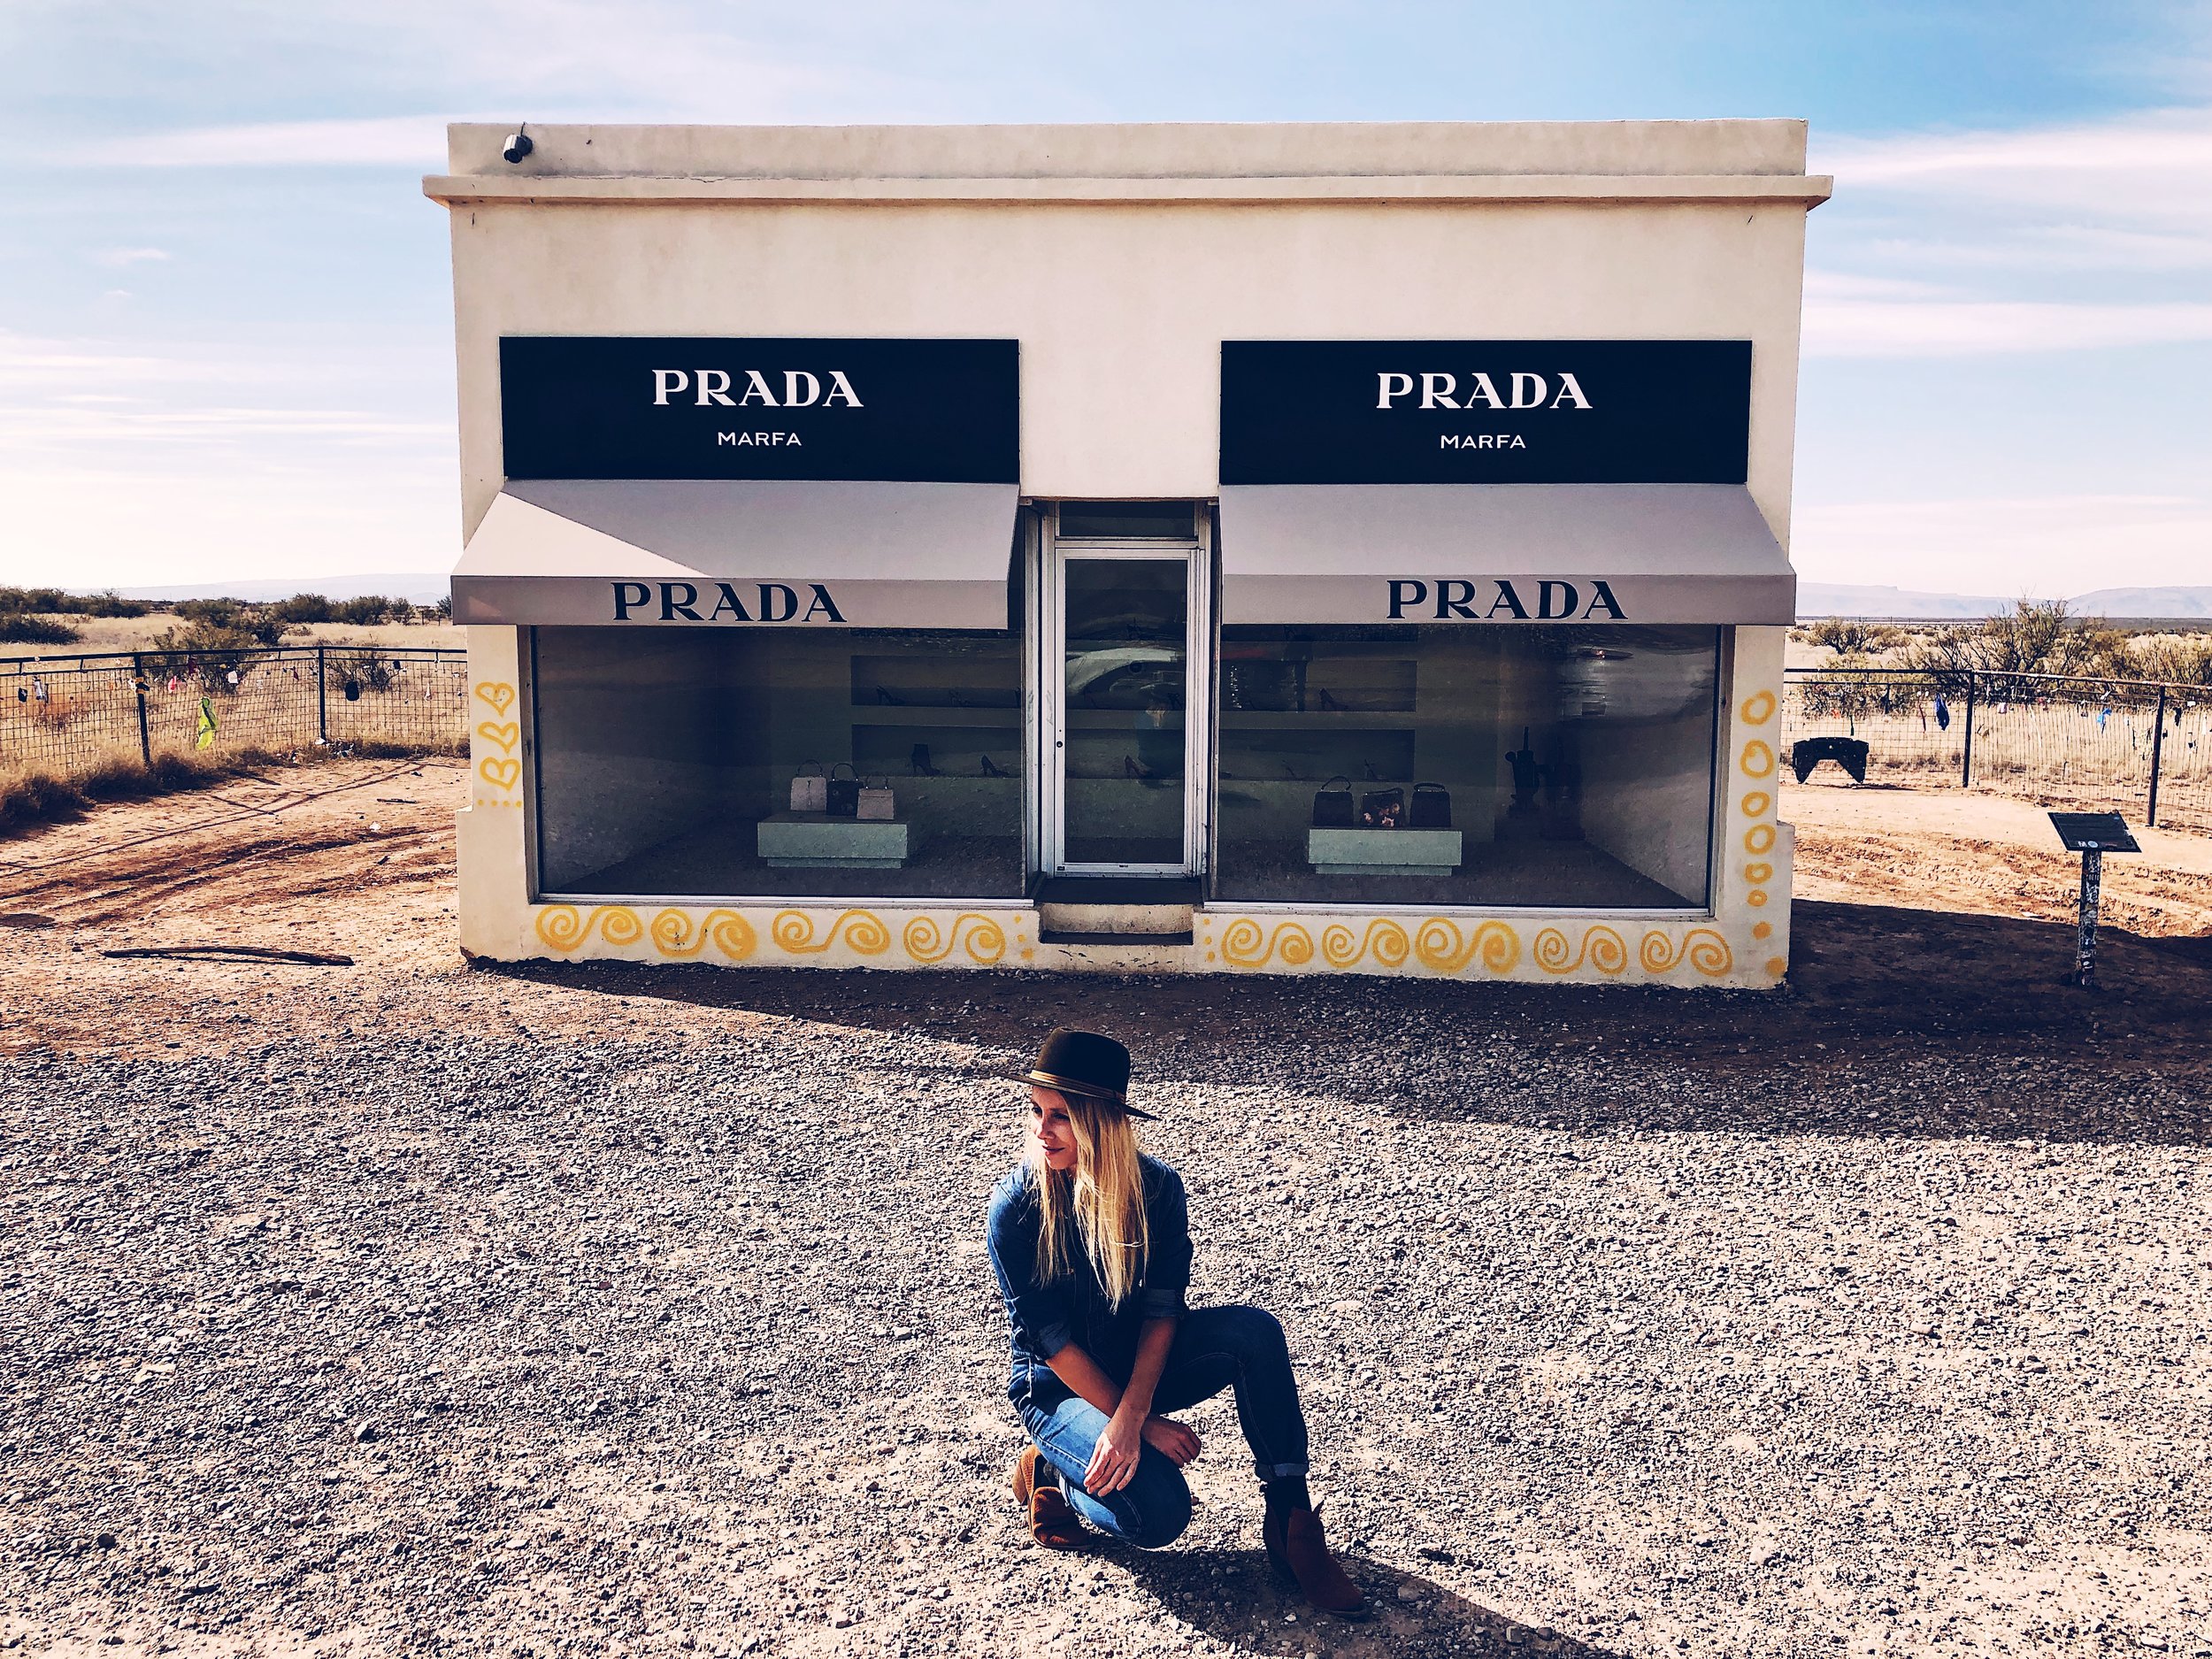 Prada Marfa, Prada art installation outside of Marfa, TX.…